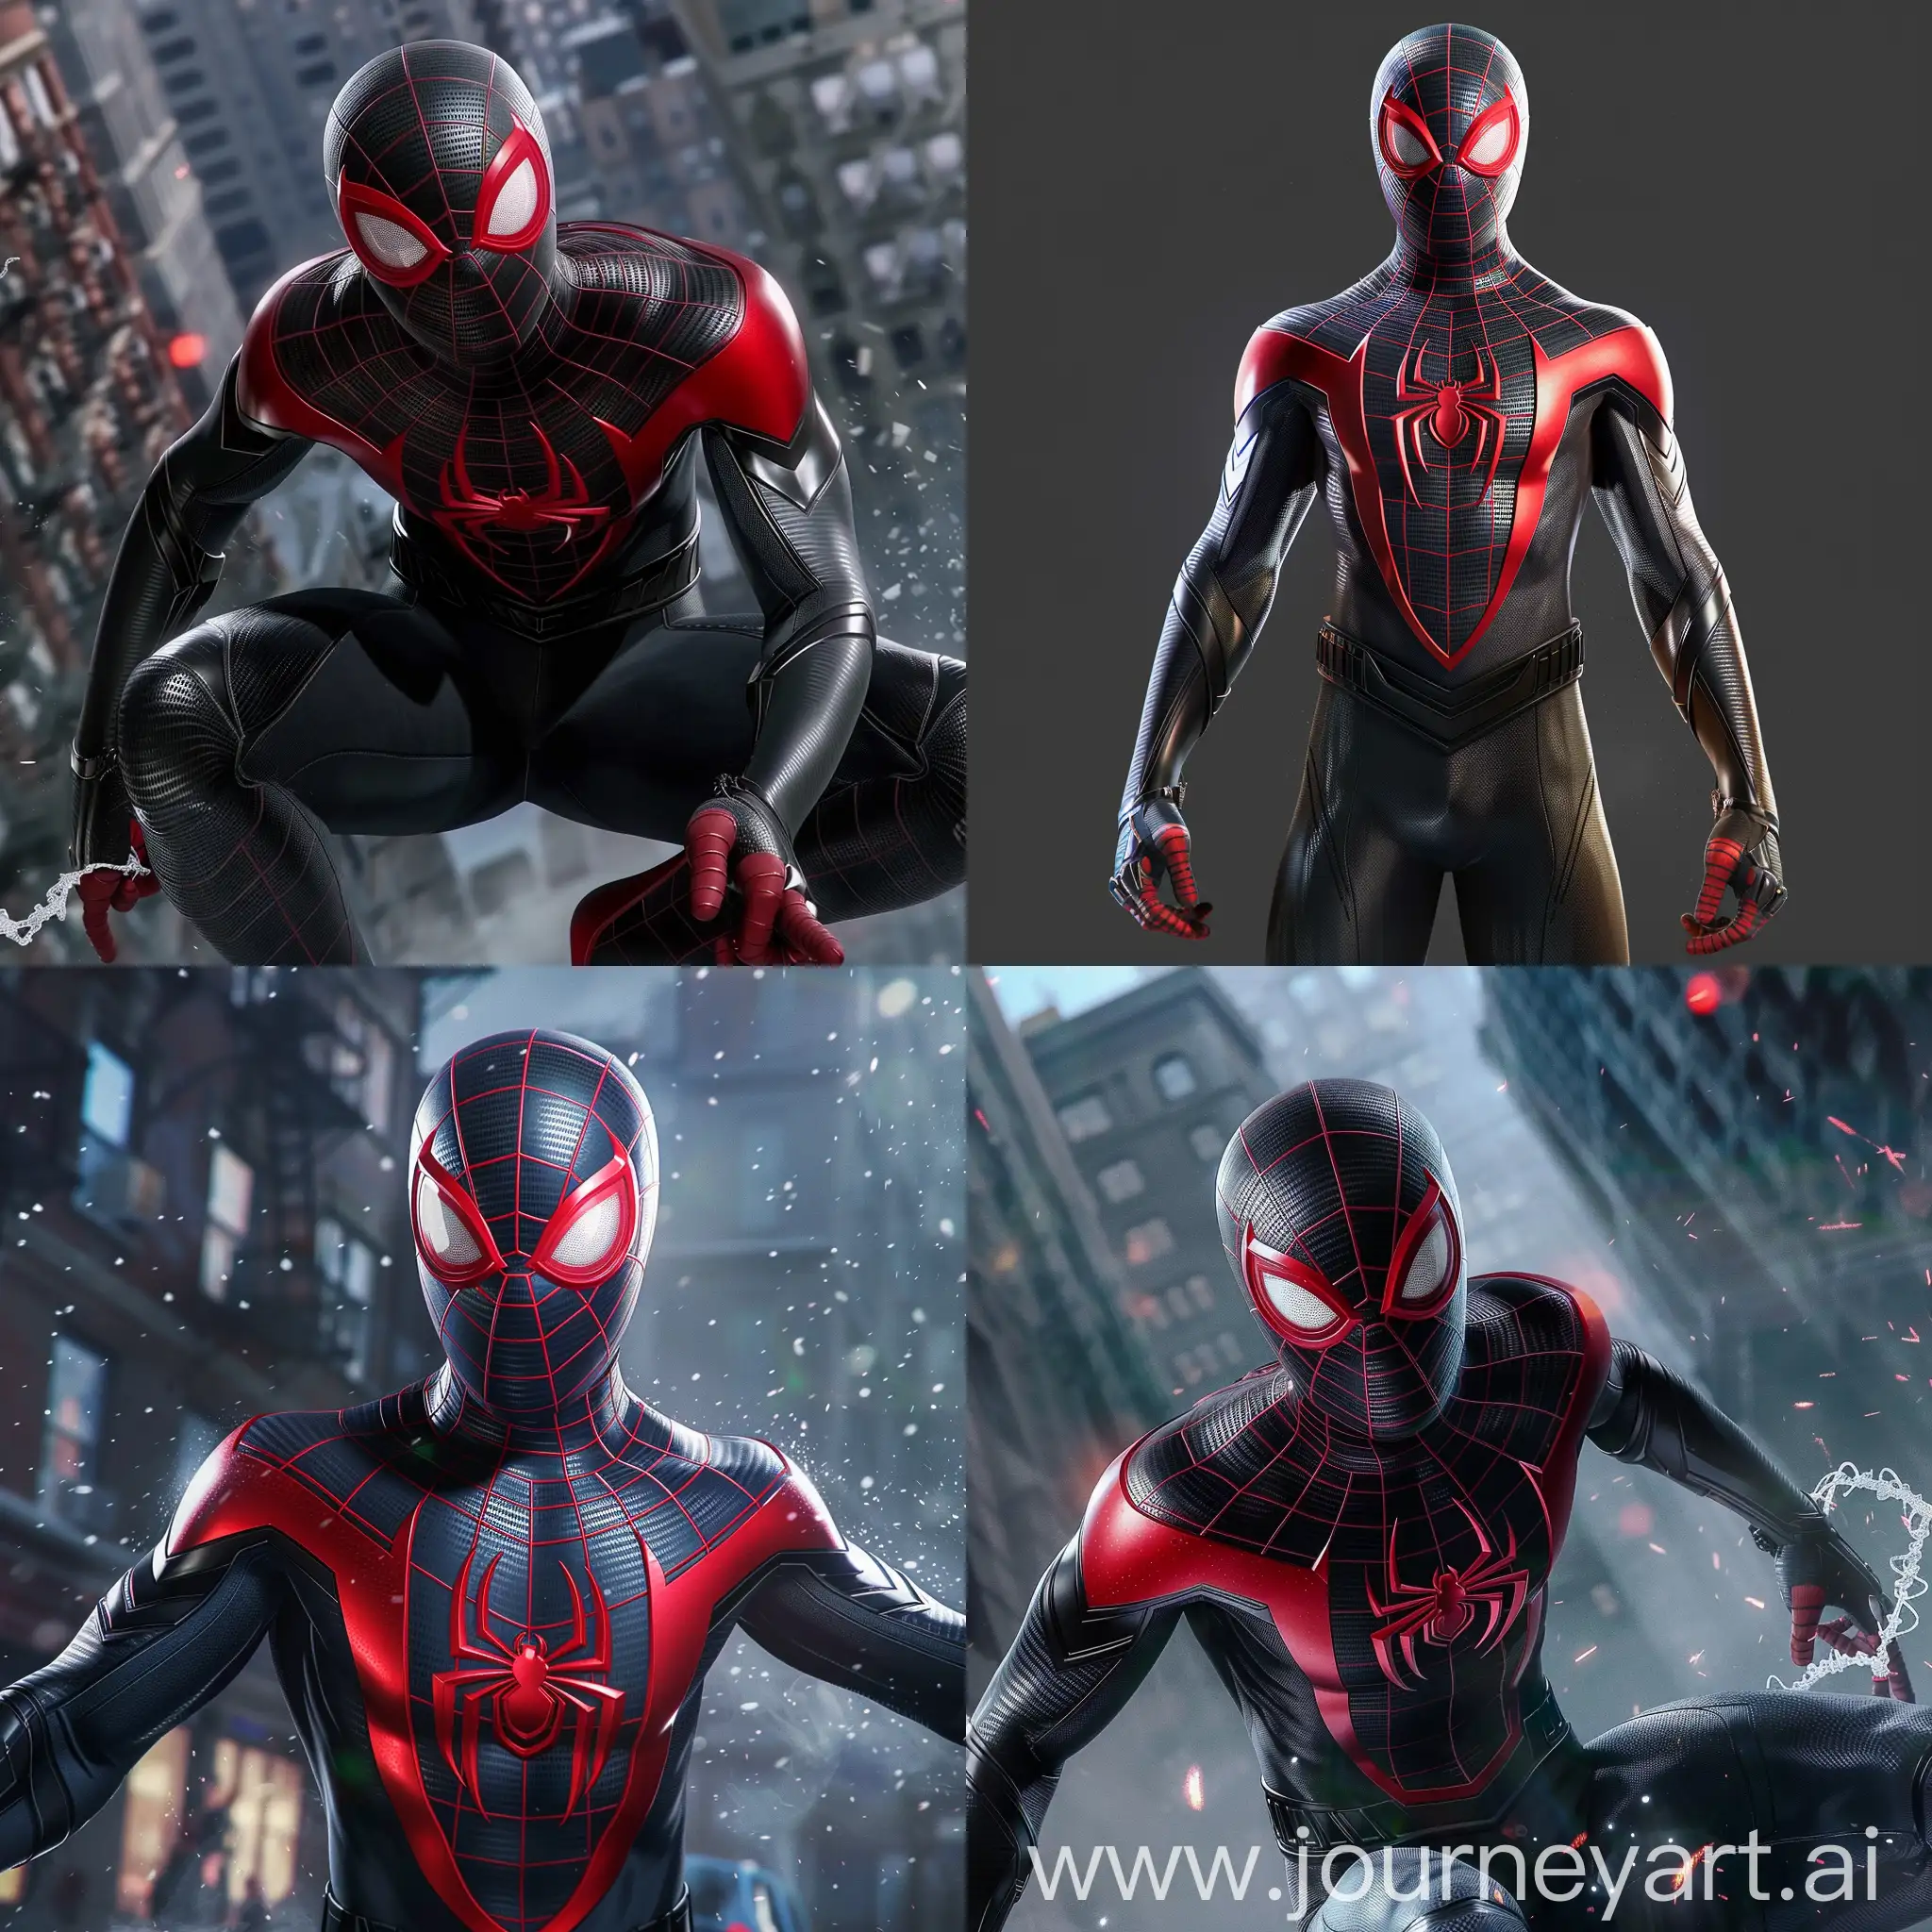 SpiderMan-Miles-Morales-in-Action-Dynamic-Portrait-of-the-Heroic-Vigilante